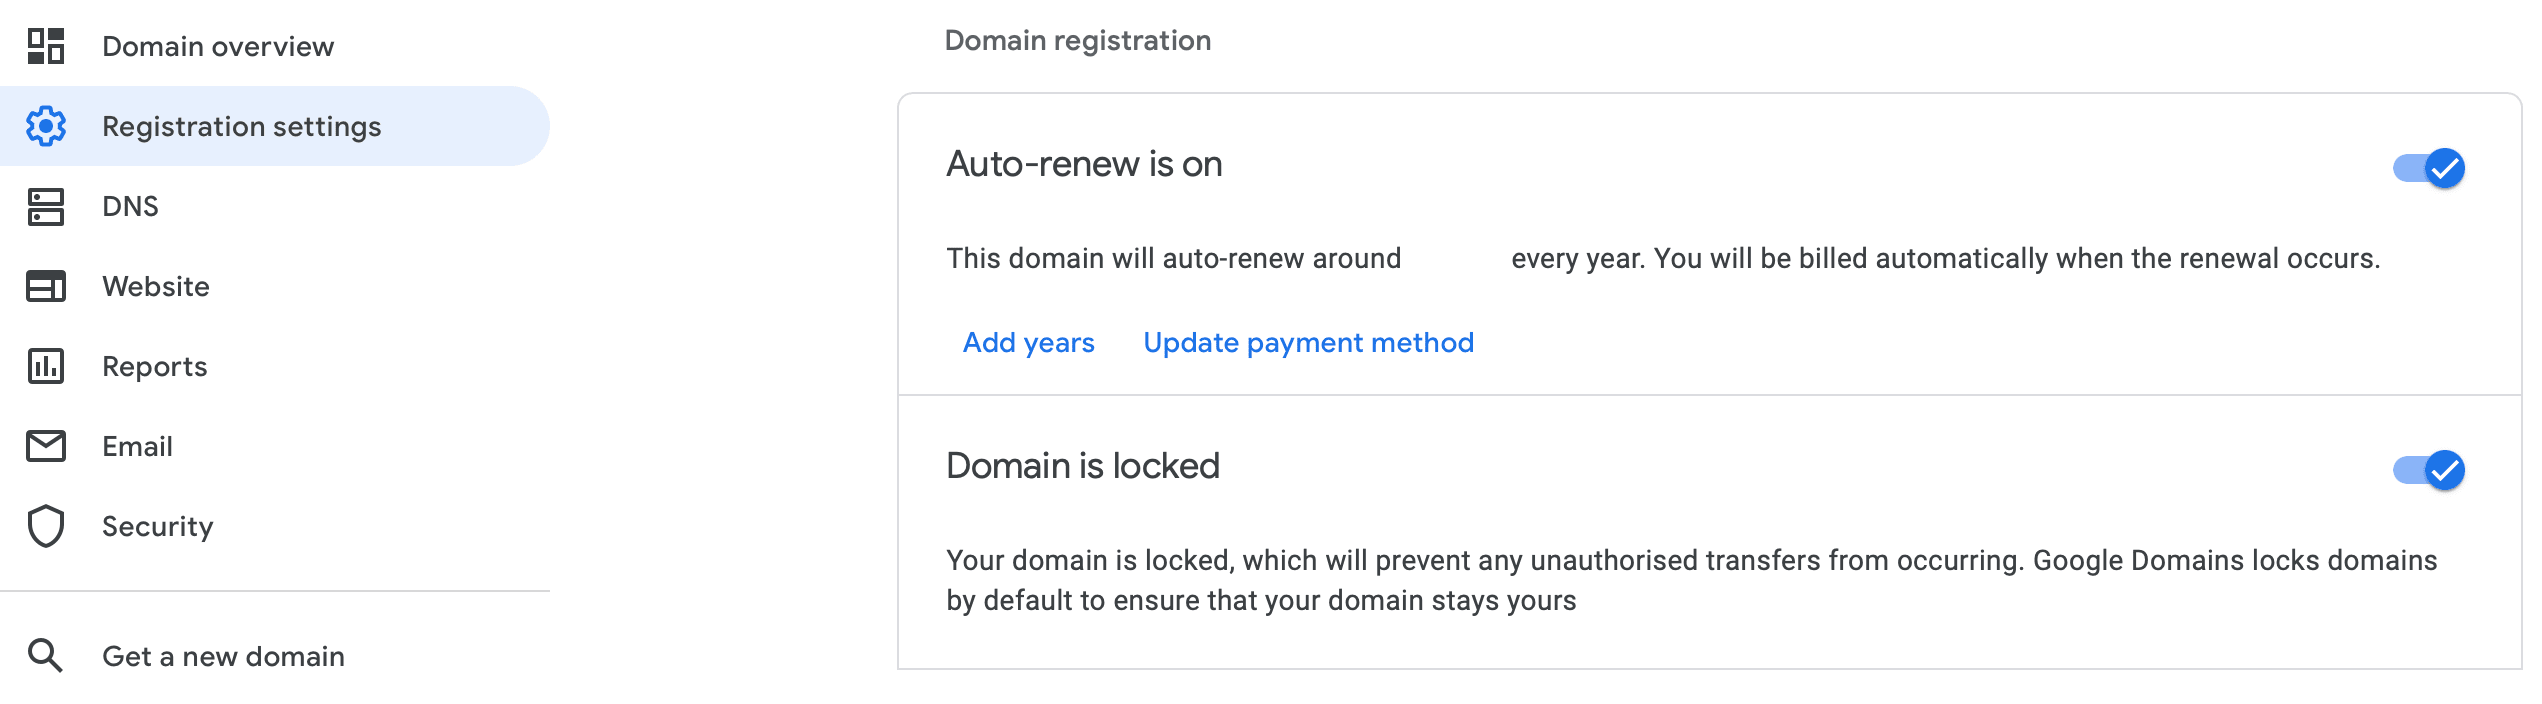 Domeny Google - Registration settings - Domain is locked